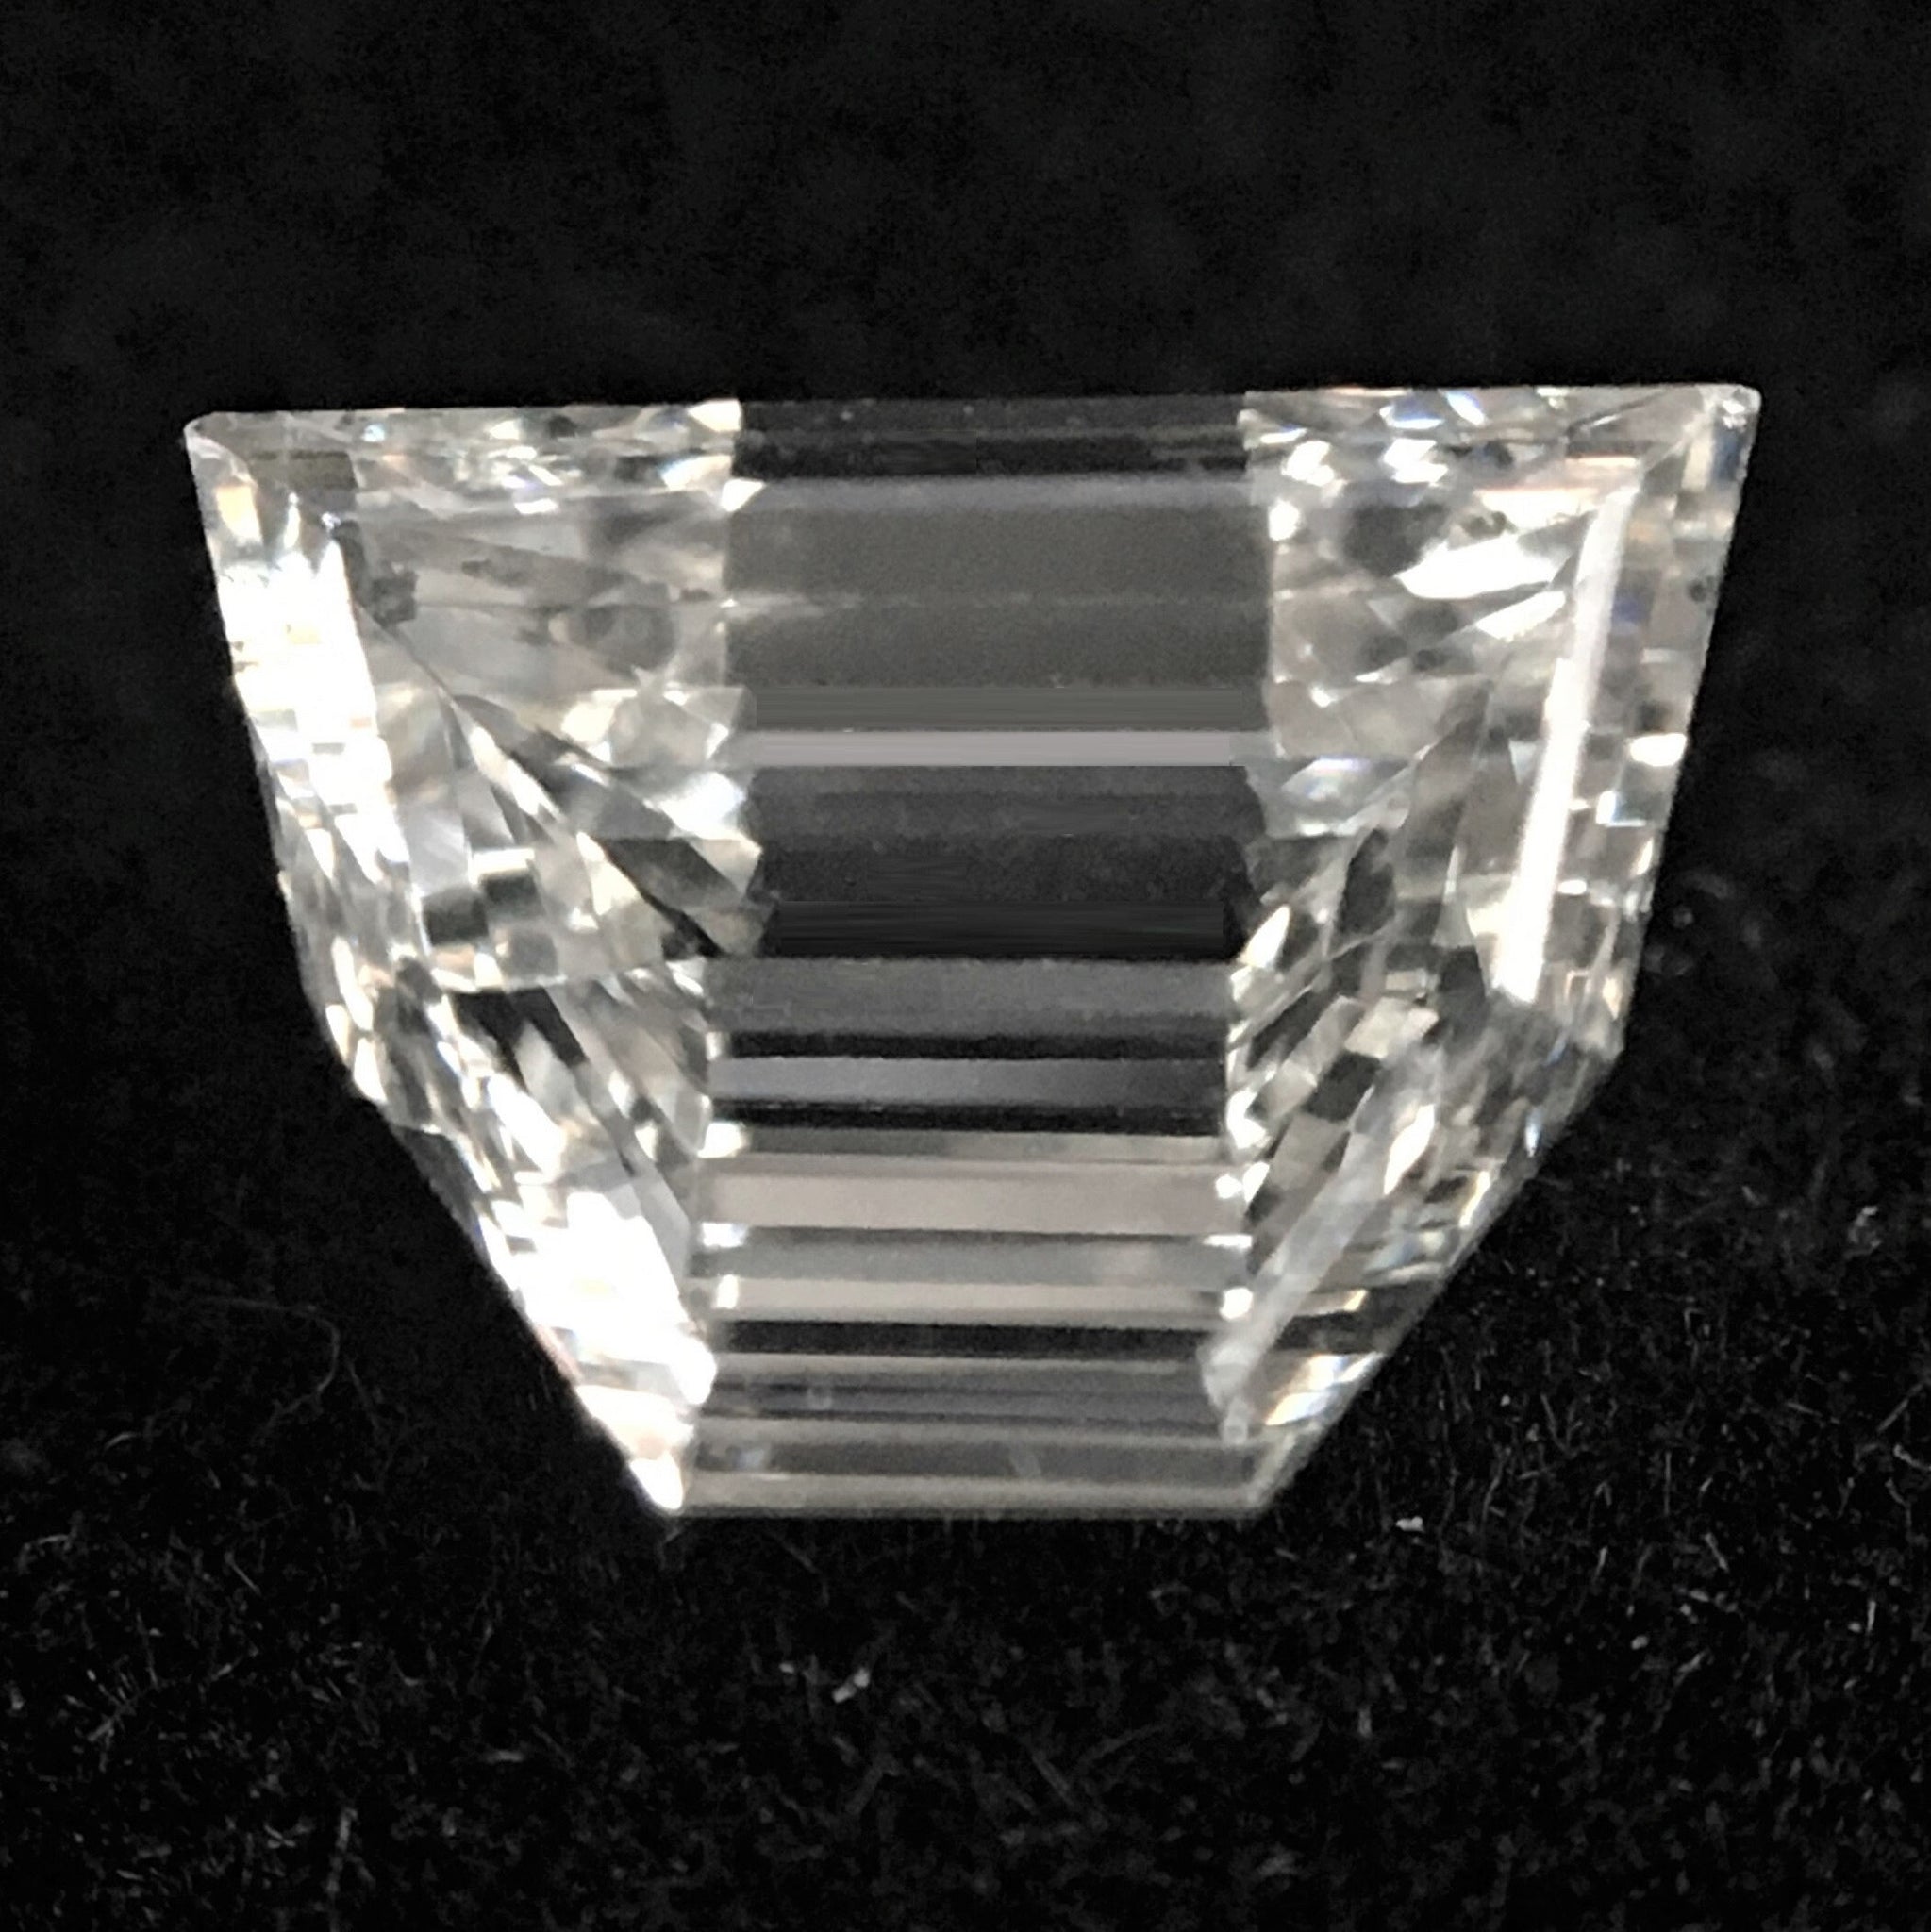 0.68 Ct Trapezoid Shape Natural Loose Diamond J Color VS1 Clarity, 4.60 mm x 6.55 mm x 2.56 mm Near Colorless Geometric Cut Diamond SJ39/58